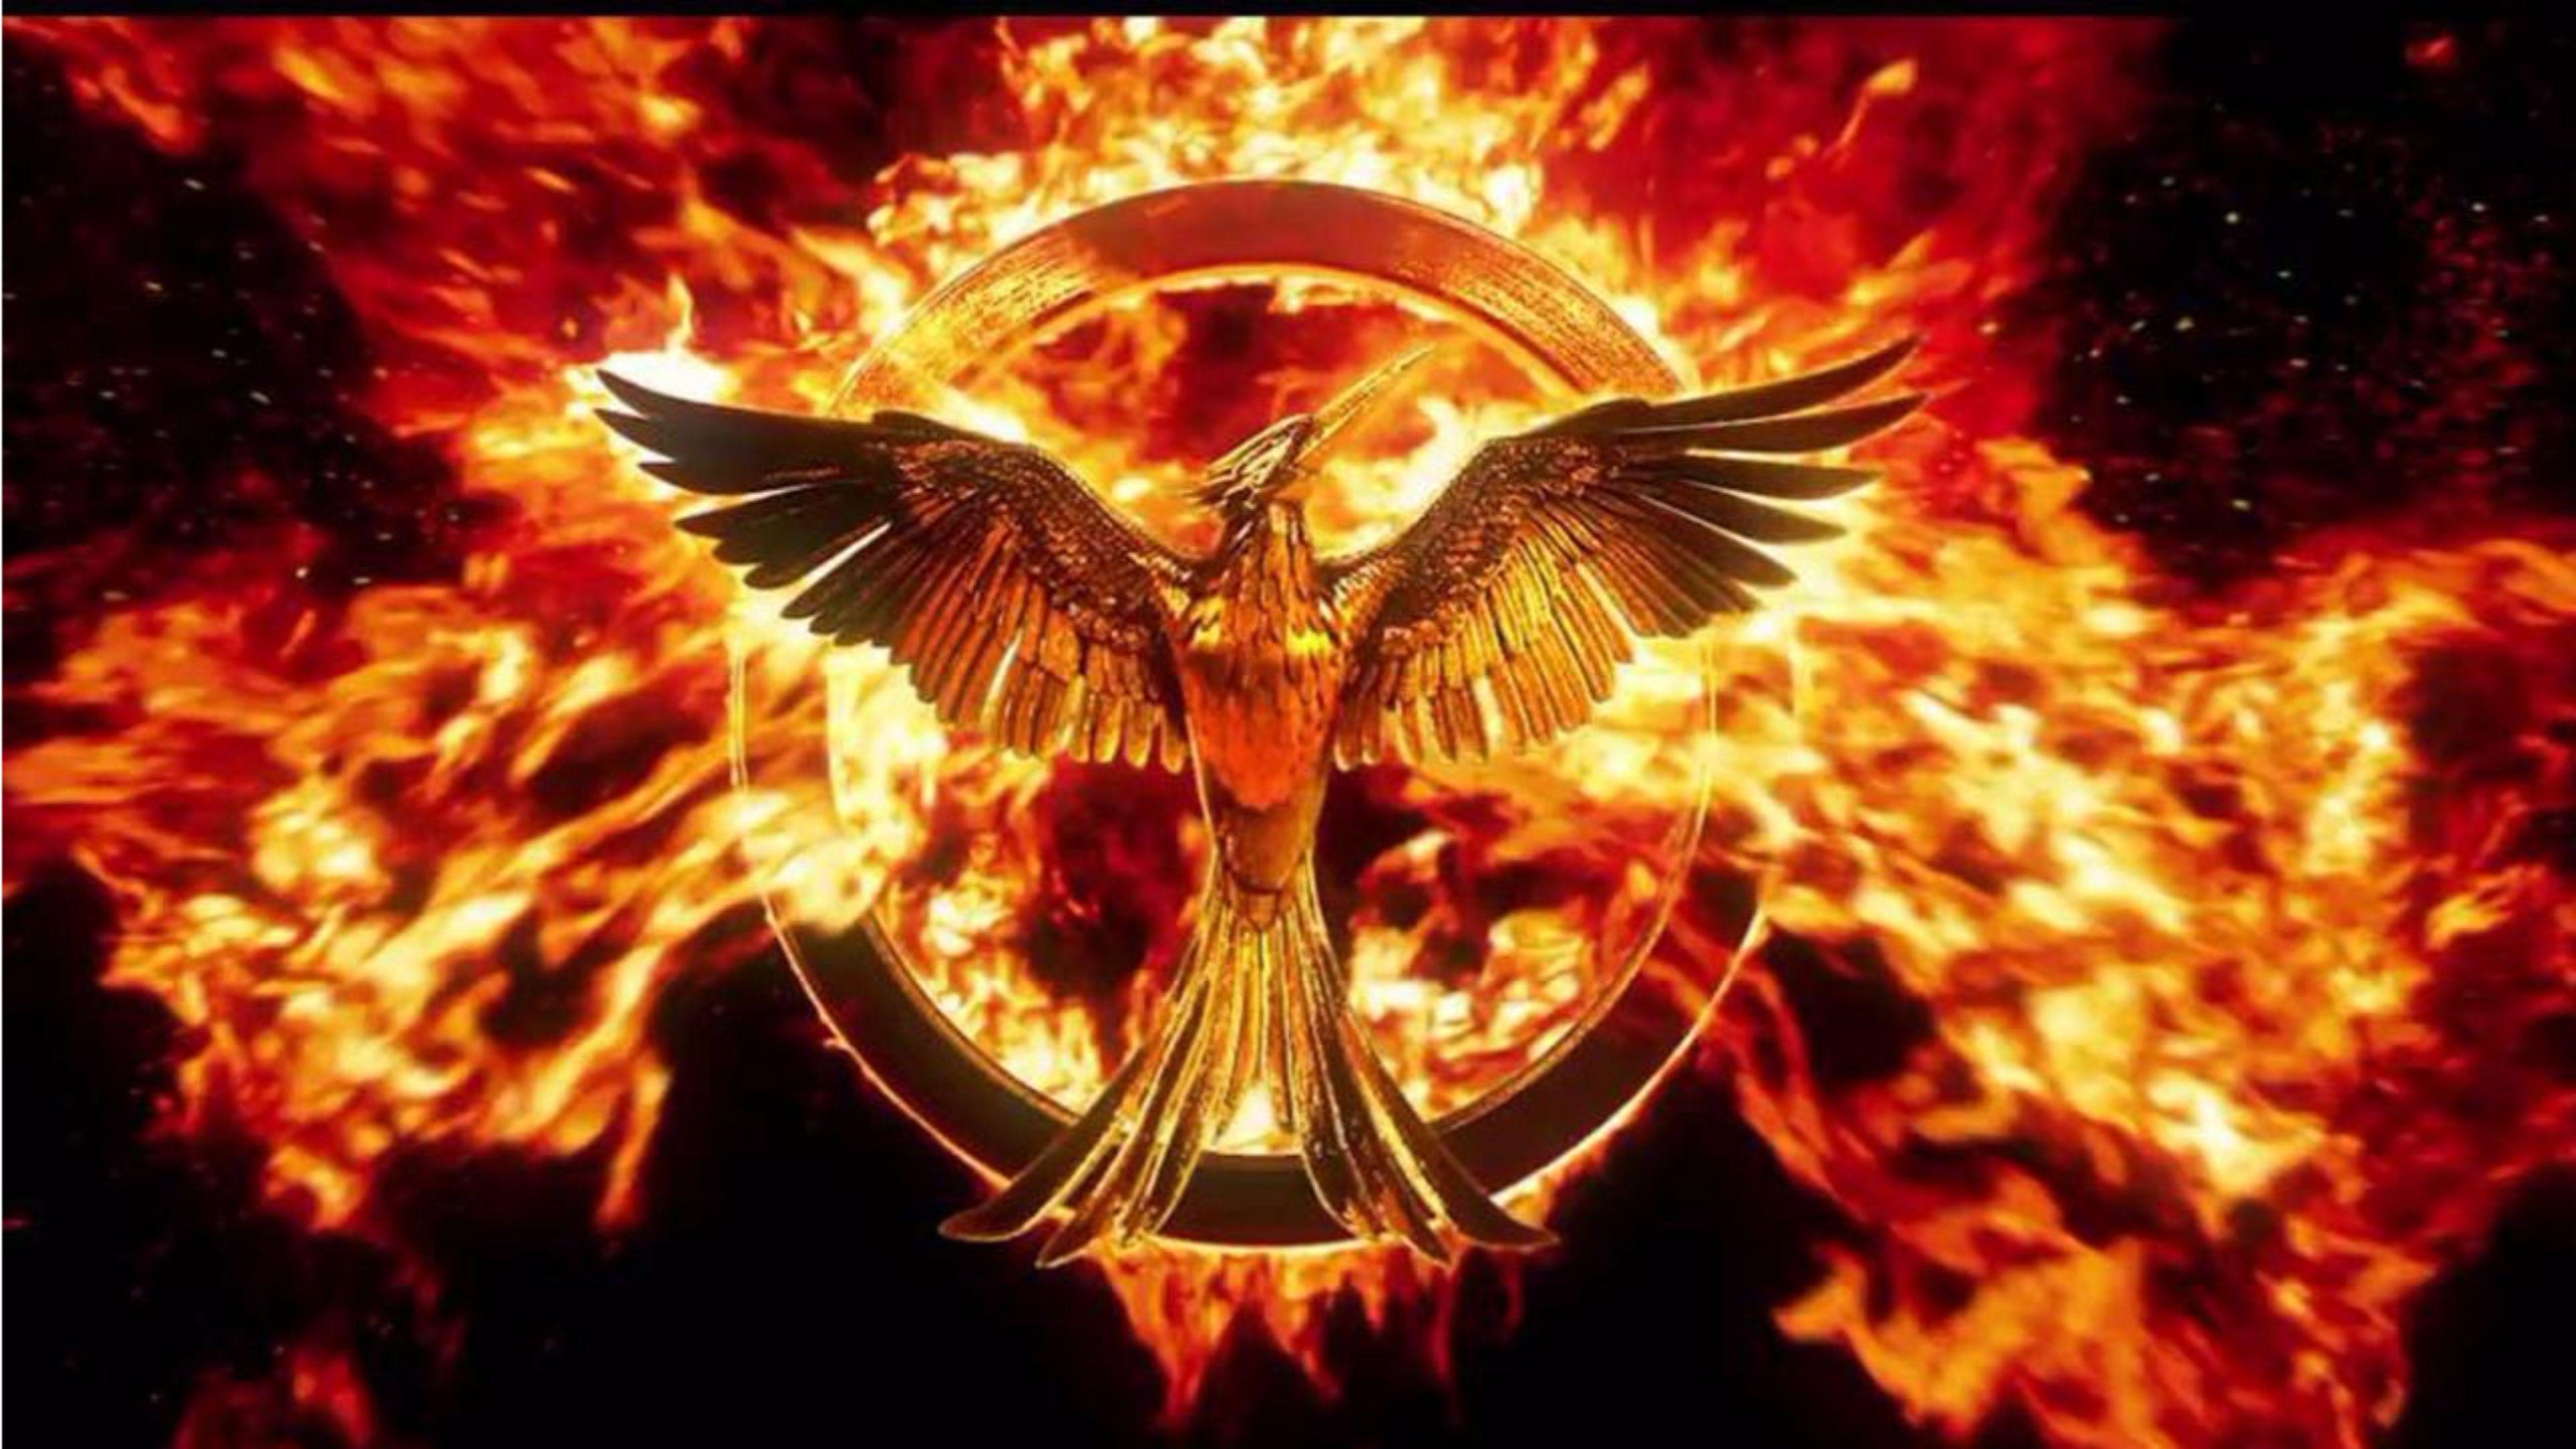 The Hunger Games Mockingjay Part 2 4K Wallpaper. Free 4K